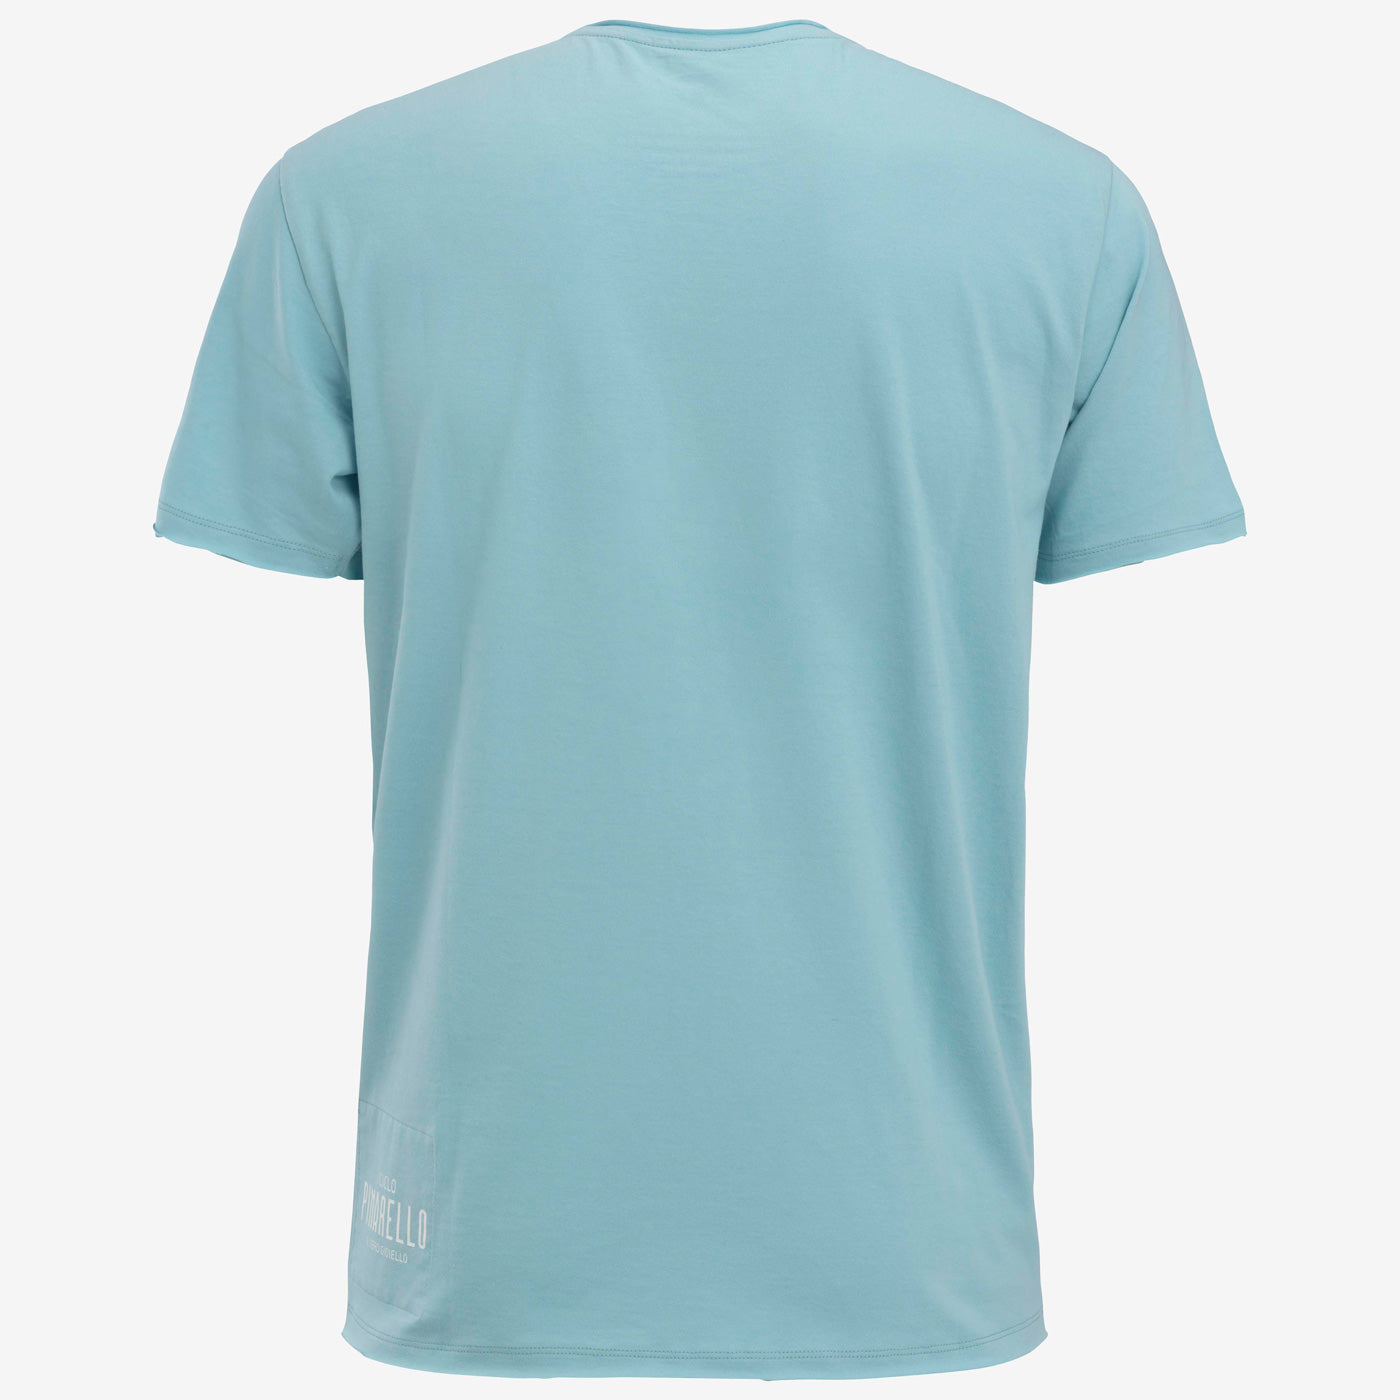 Pinarello Multipla t-shirt - Light blue | All4cycling